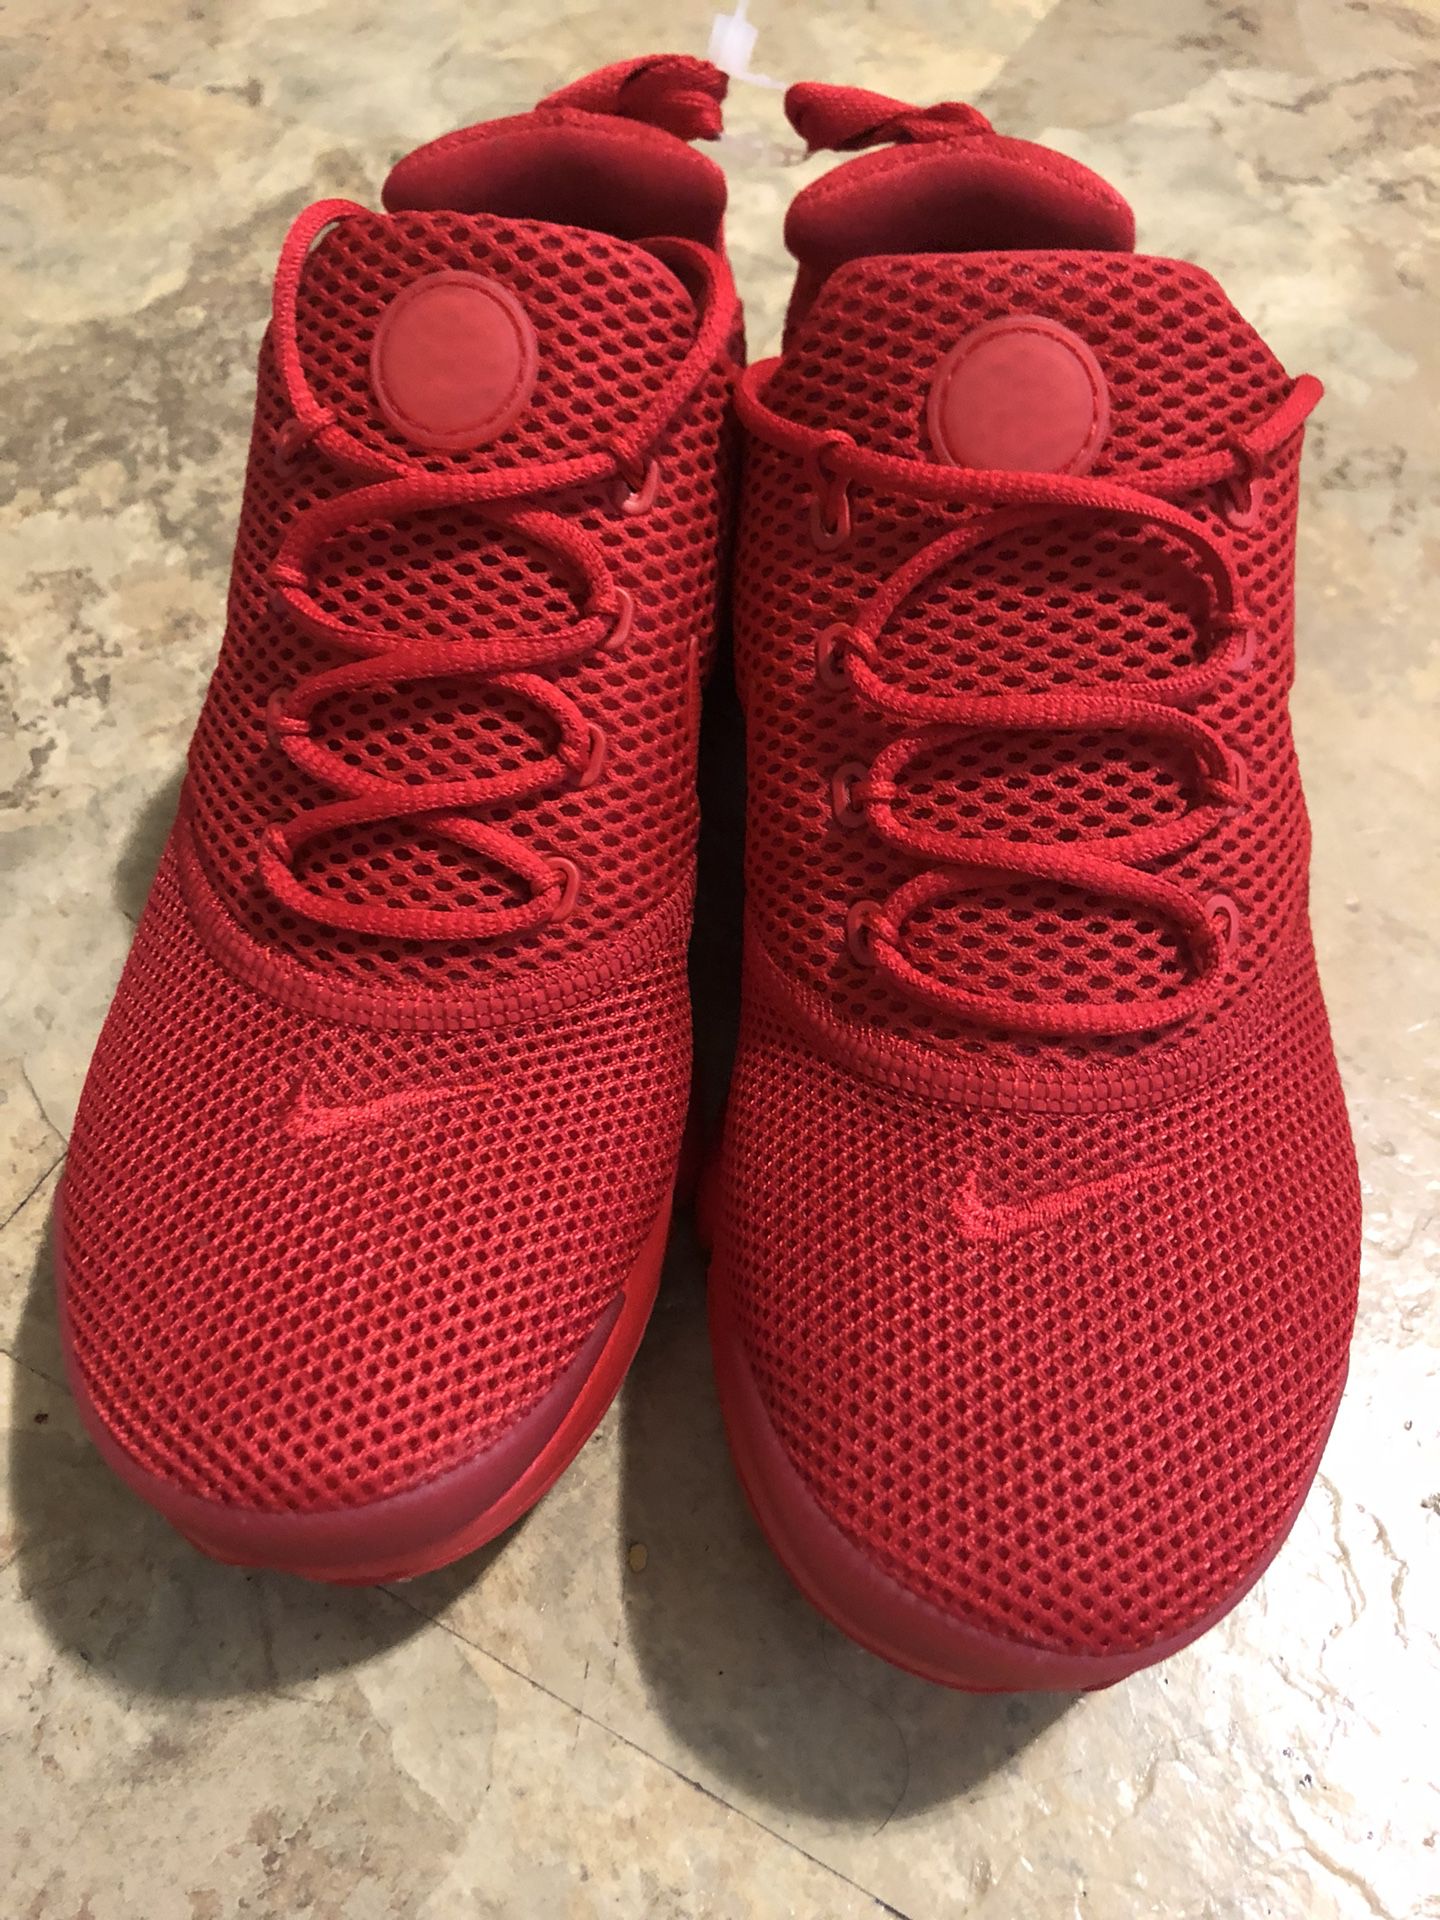 Nike Presto Fly GS triple red running shoe